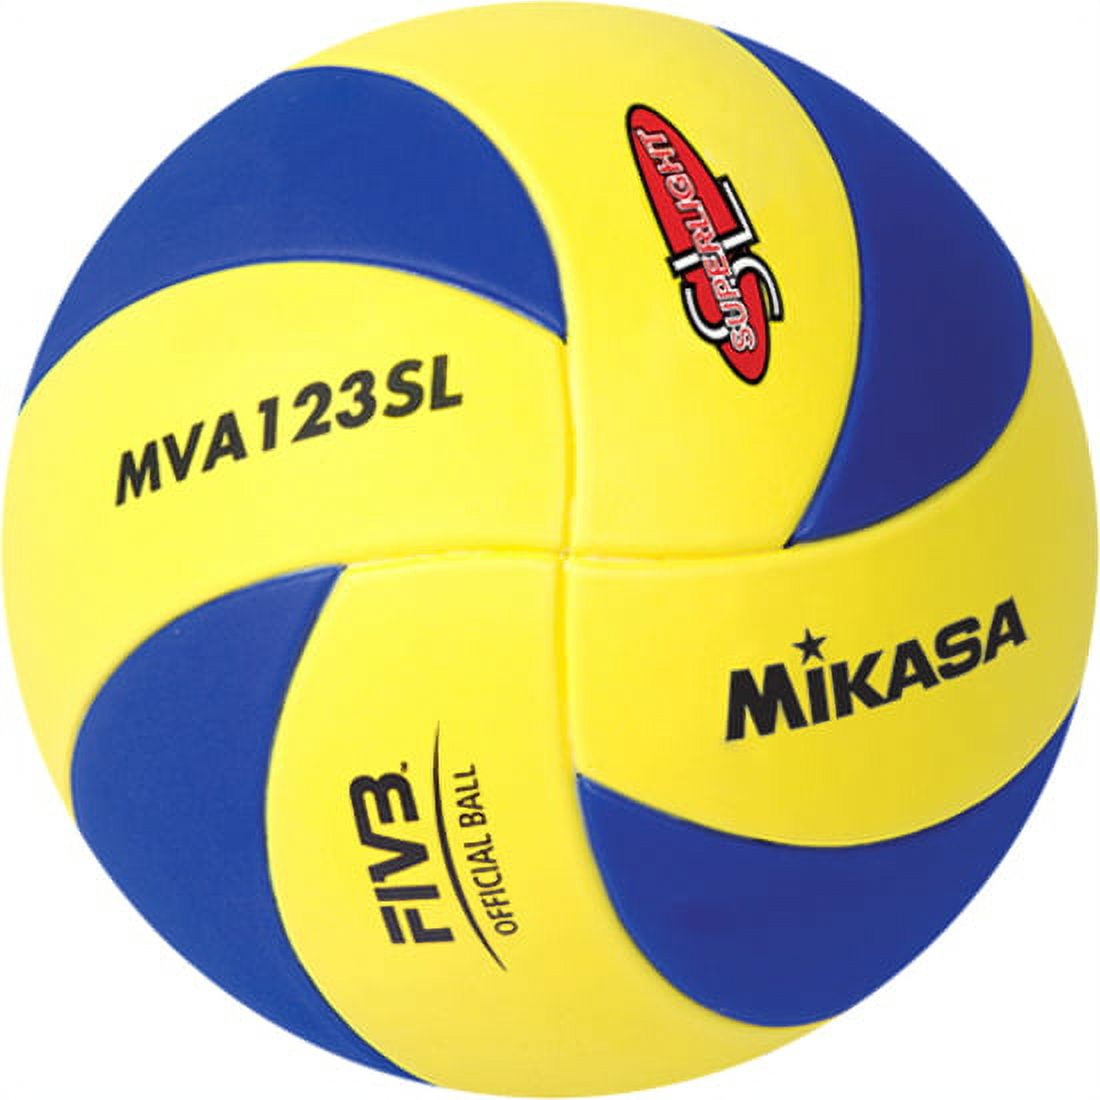 Mikasa MVA123SL Youth Training Indoor Volleyball, Blue/Yellow